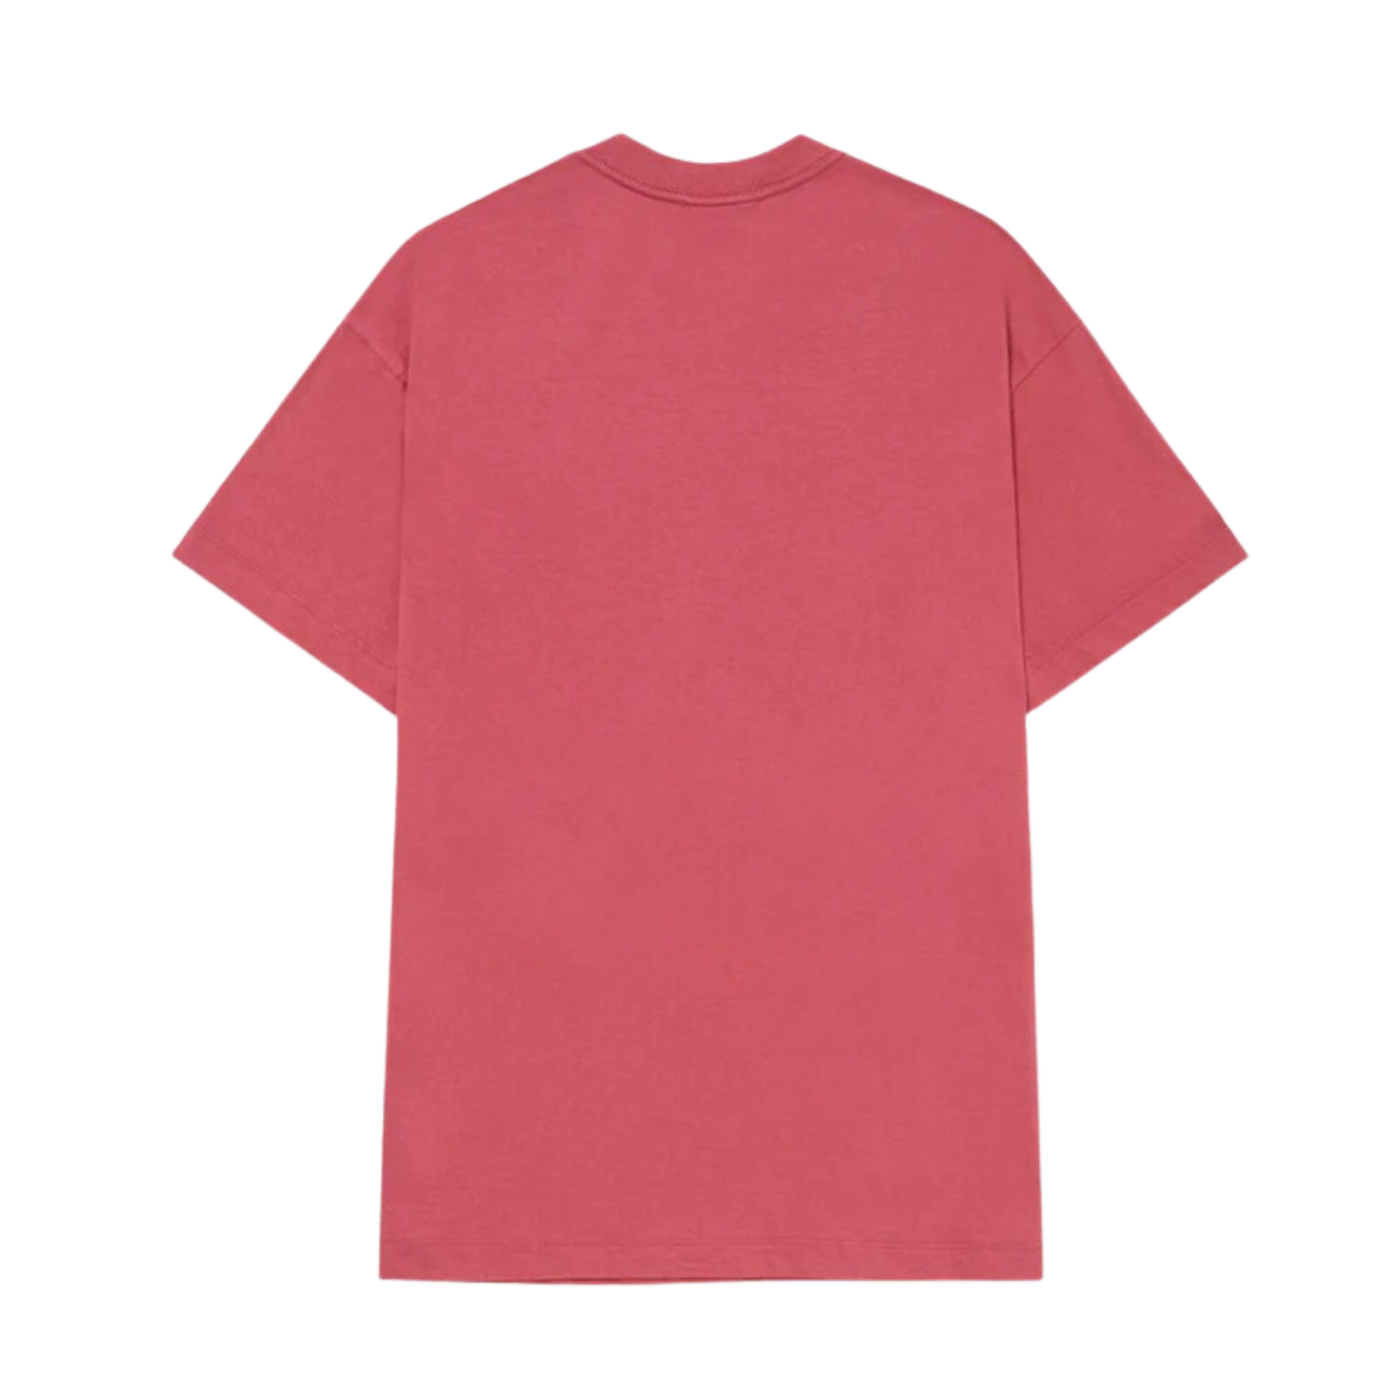 Camiseta Piet Pocket Vintage Red